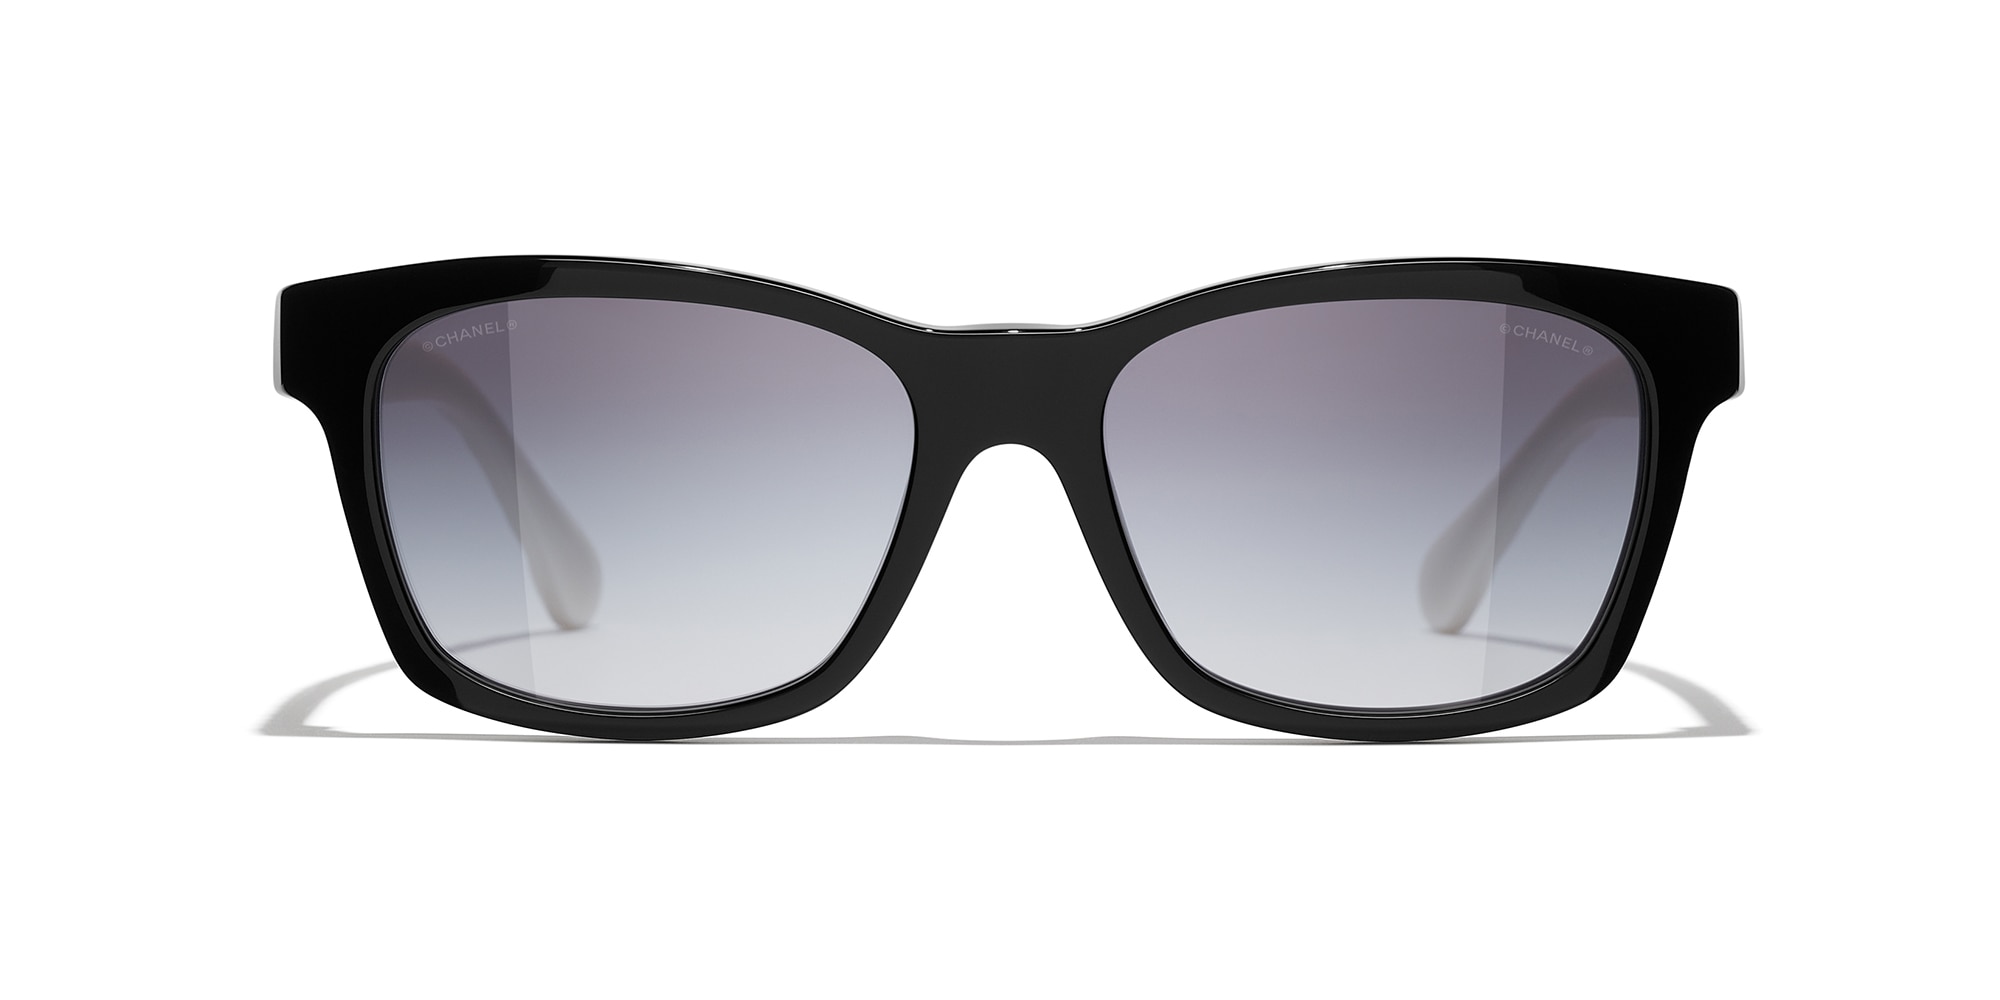 CHANEL Aviator sunglasses in c622s8  black gray polarized  Breuninger